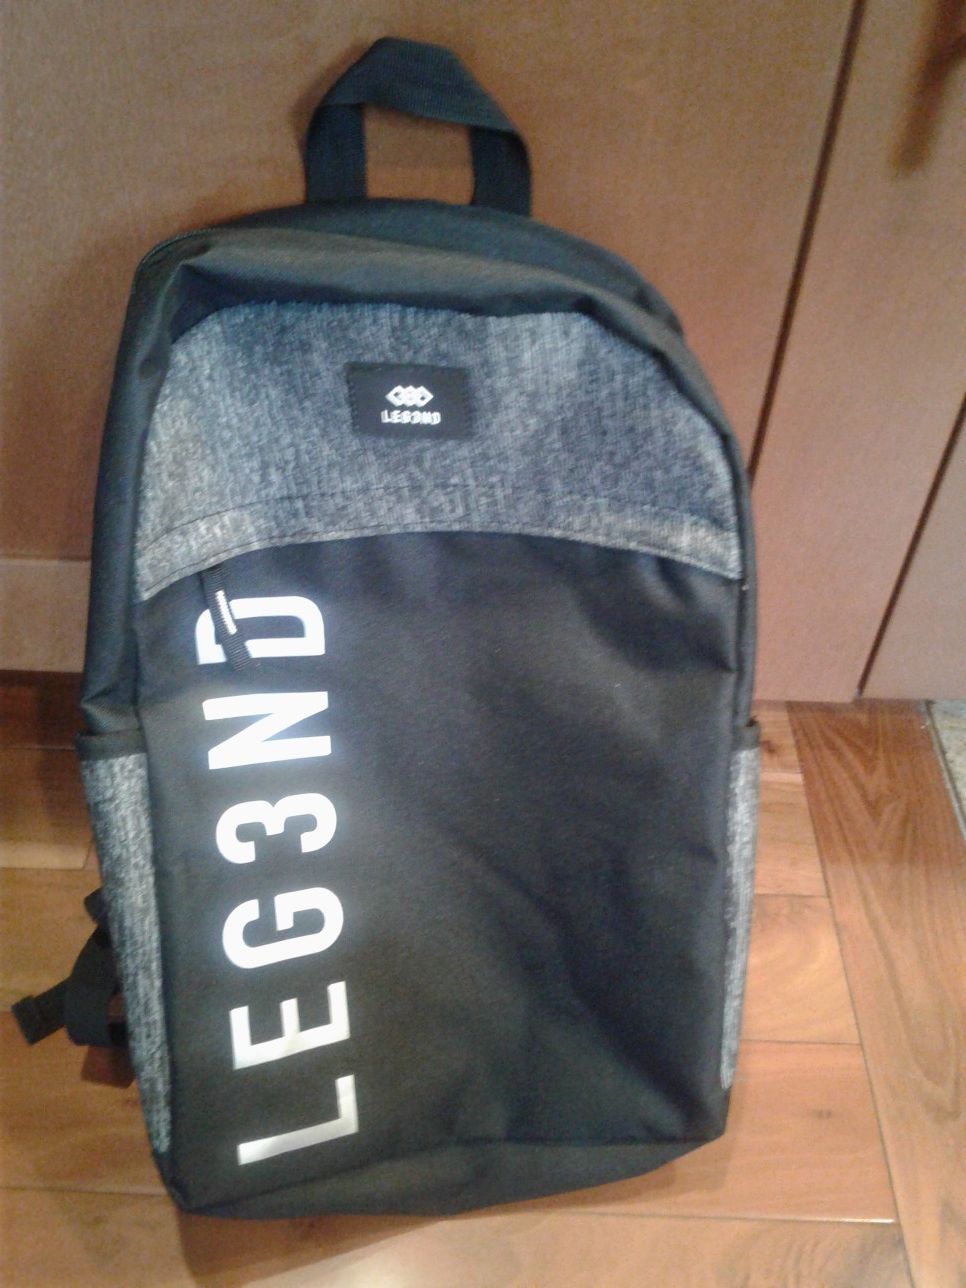 LEG3ND backpack New